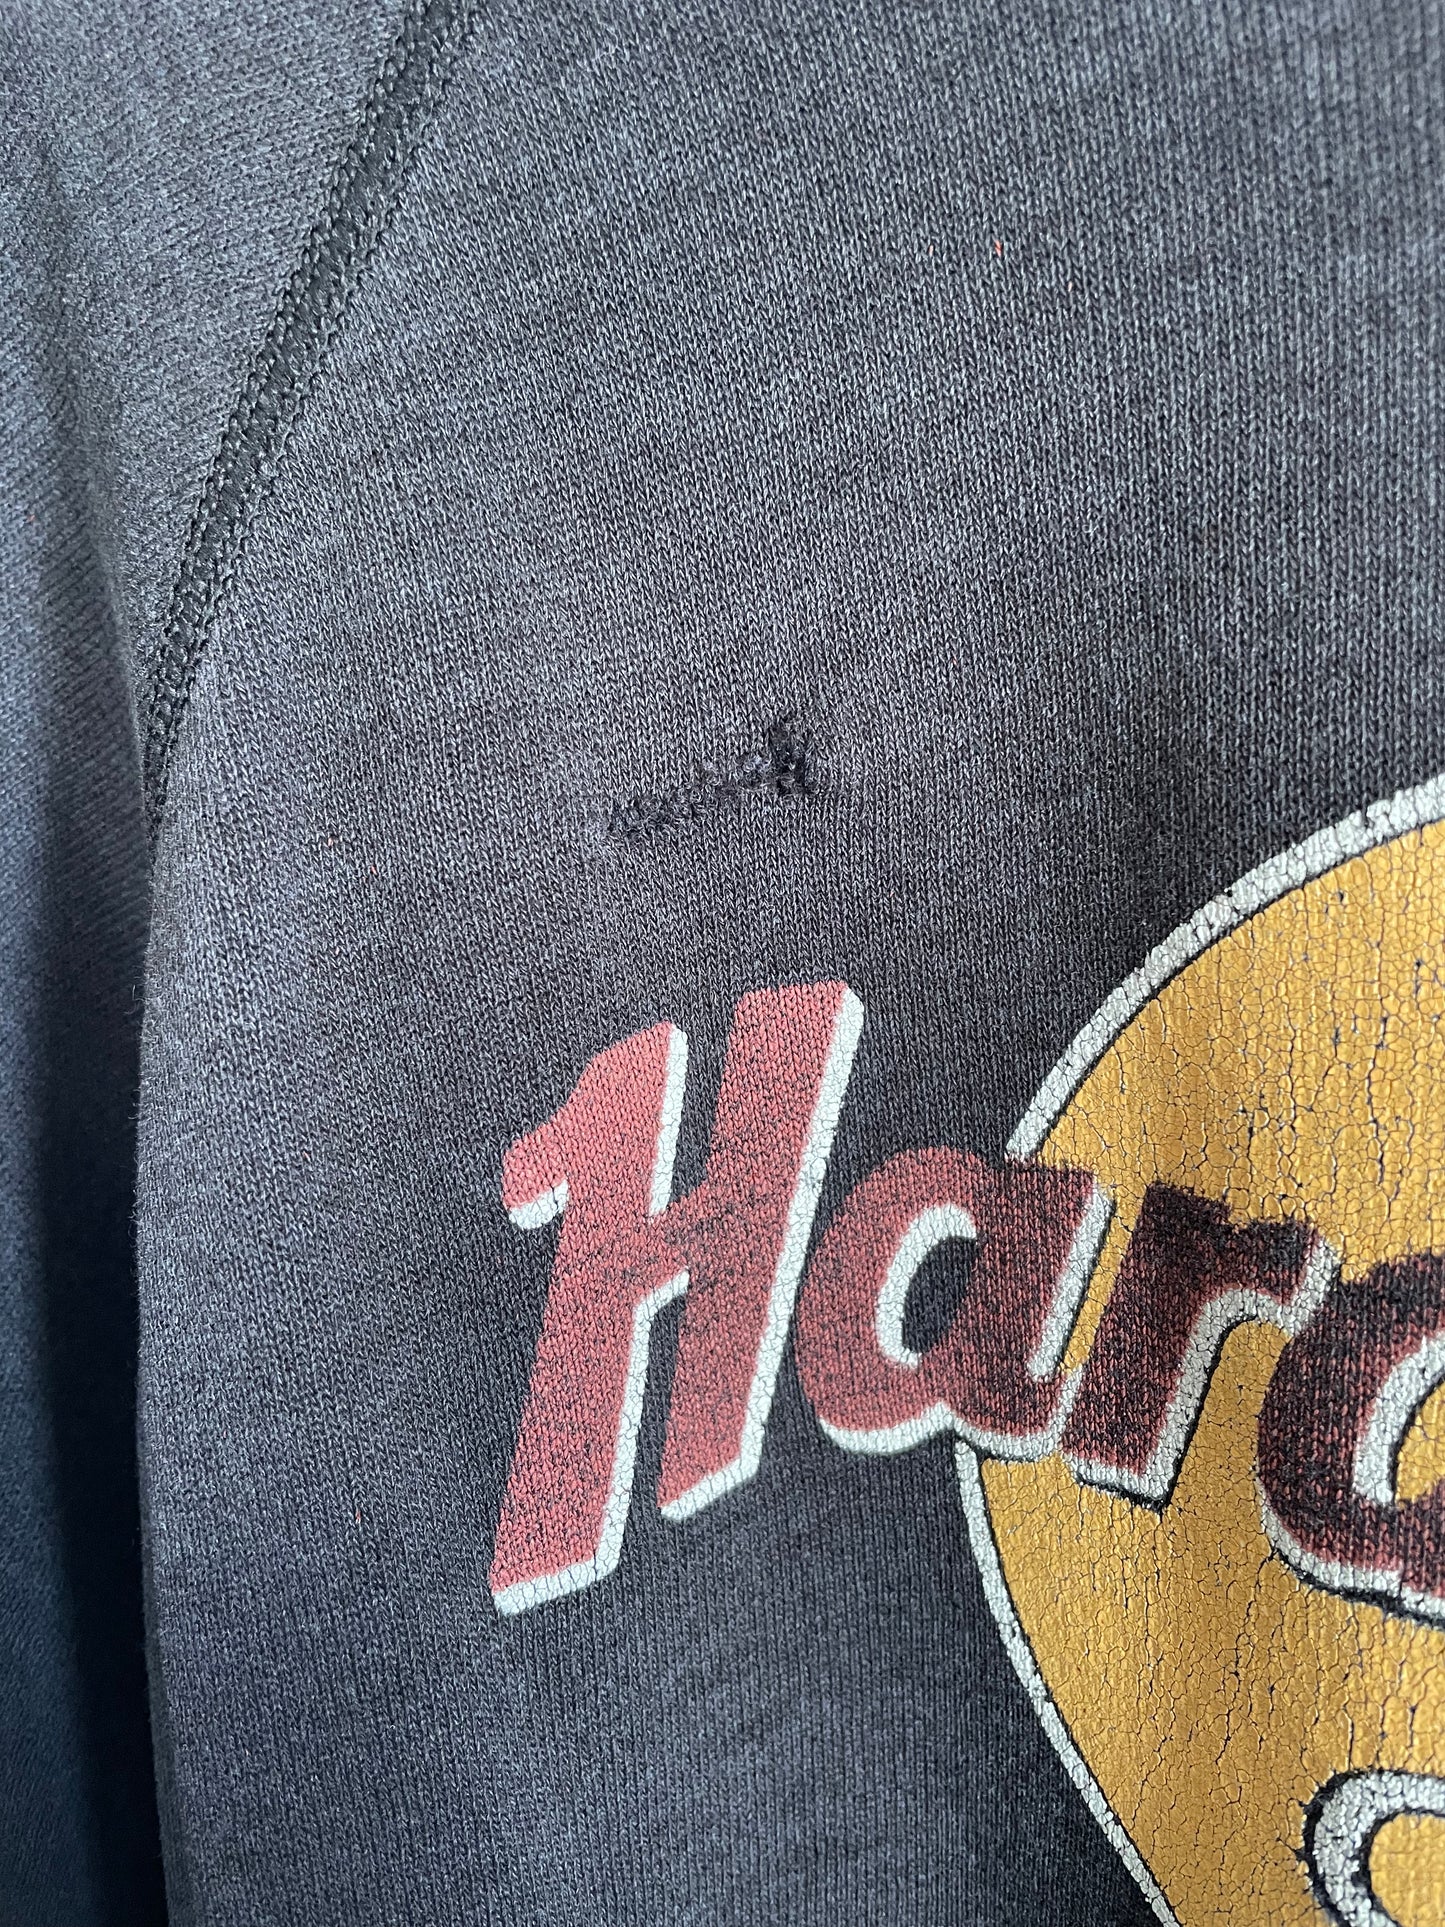 90s Hard Rock Cafe Chicago Sweatshirt